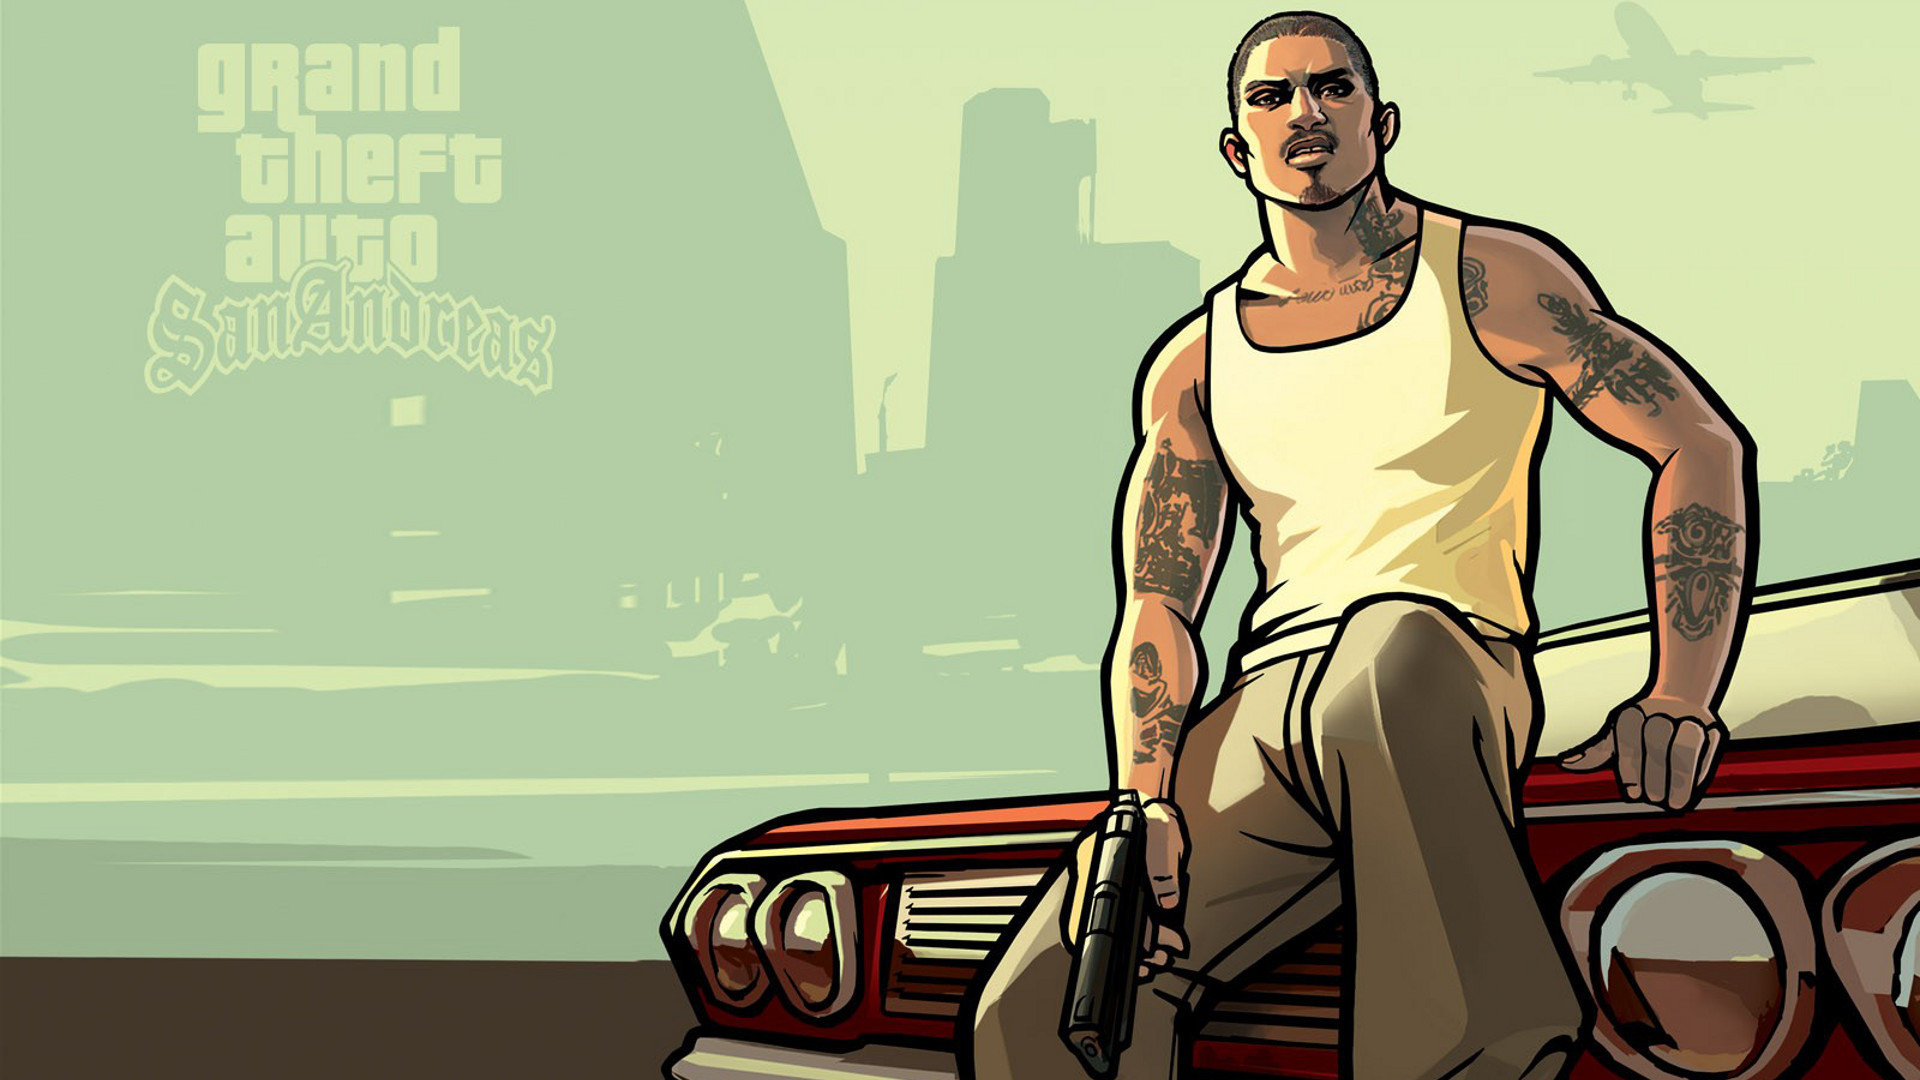 Download full hd 1920x1080 Grand Theft Auto: San Andreas (GTA SA) PC wallpaper ID:72702 for free